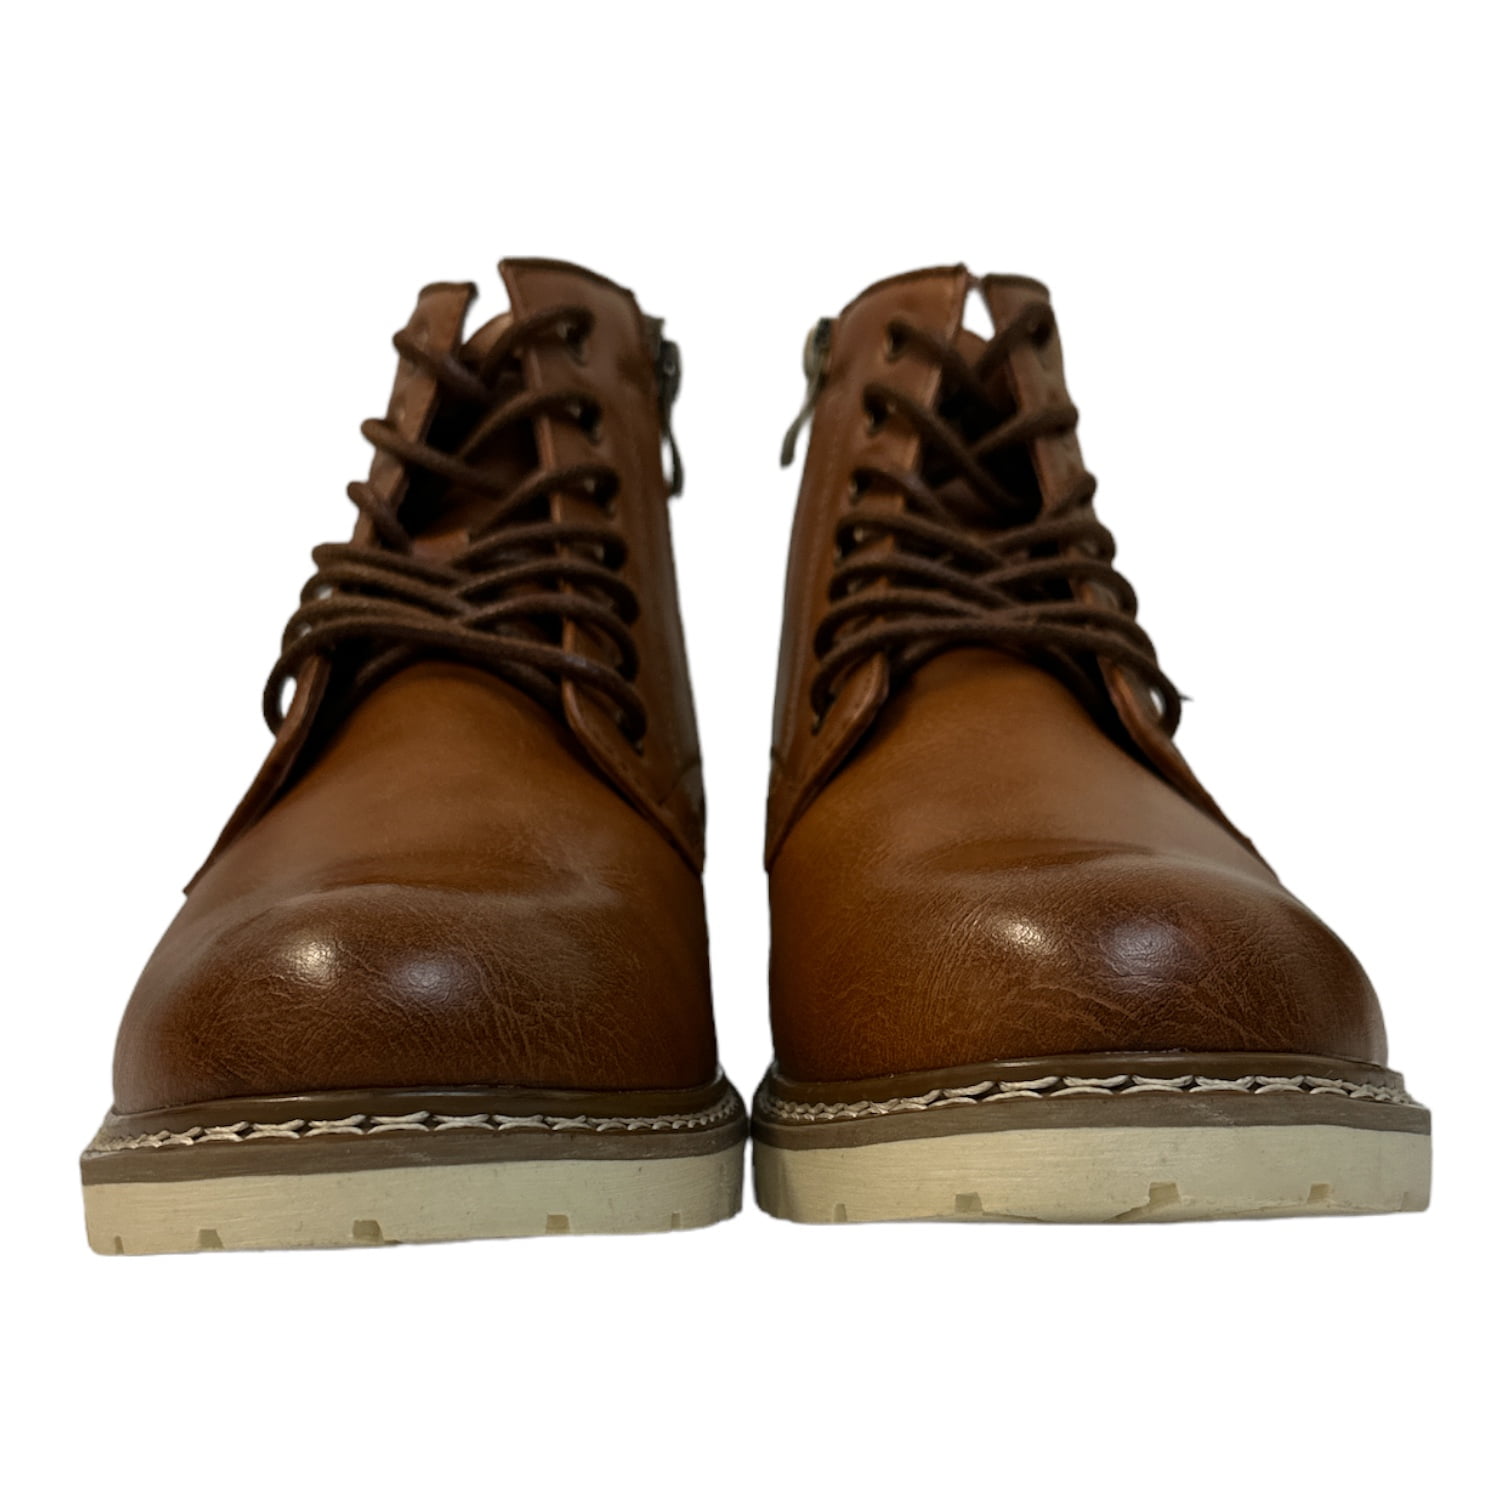 Steve Madden Men's Lace-Up Broome Chukka Ankle Boots (Cognac, 9) - Walmart.com